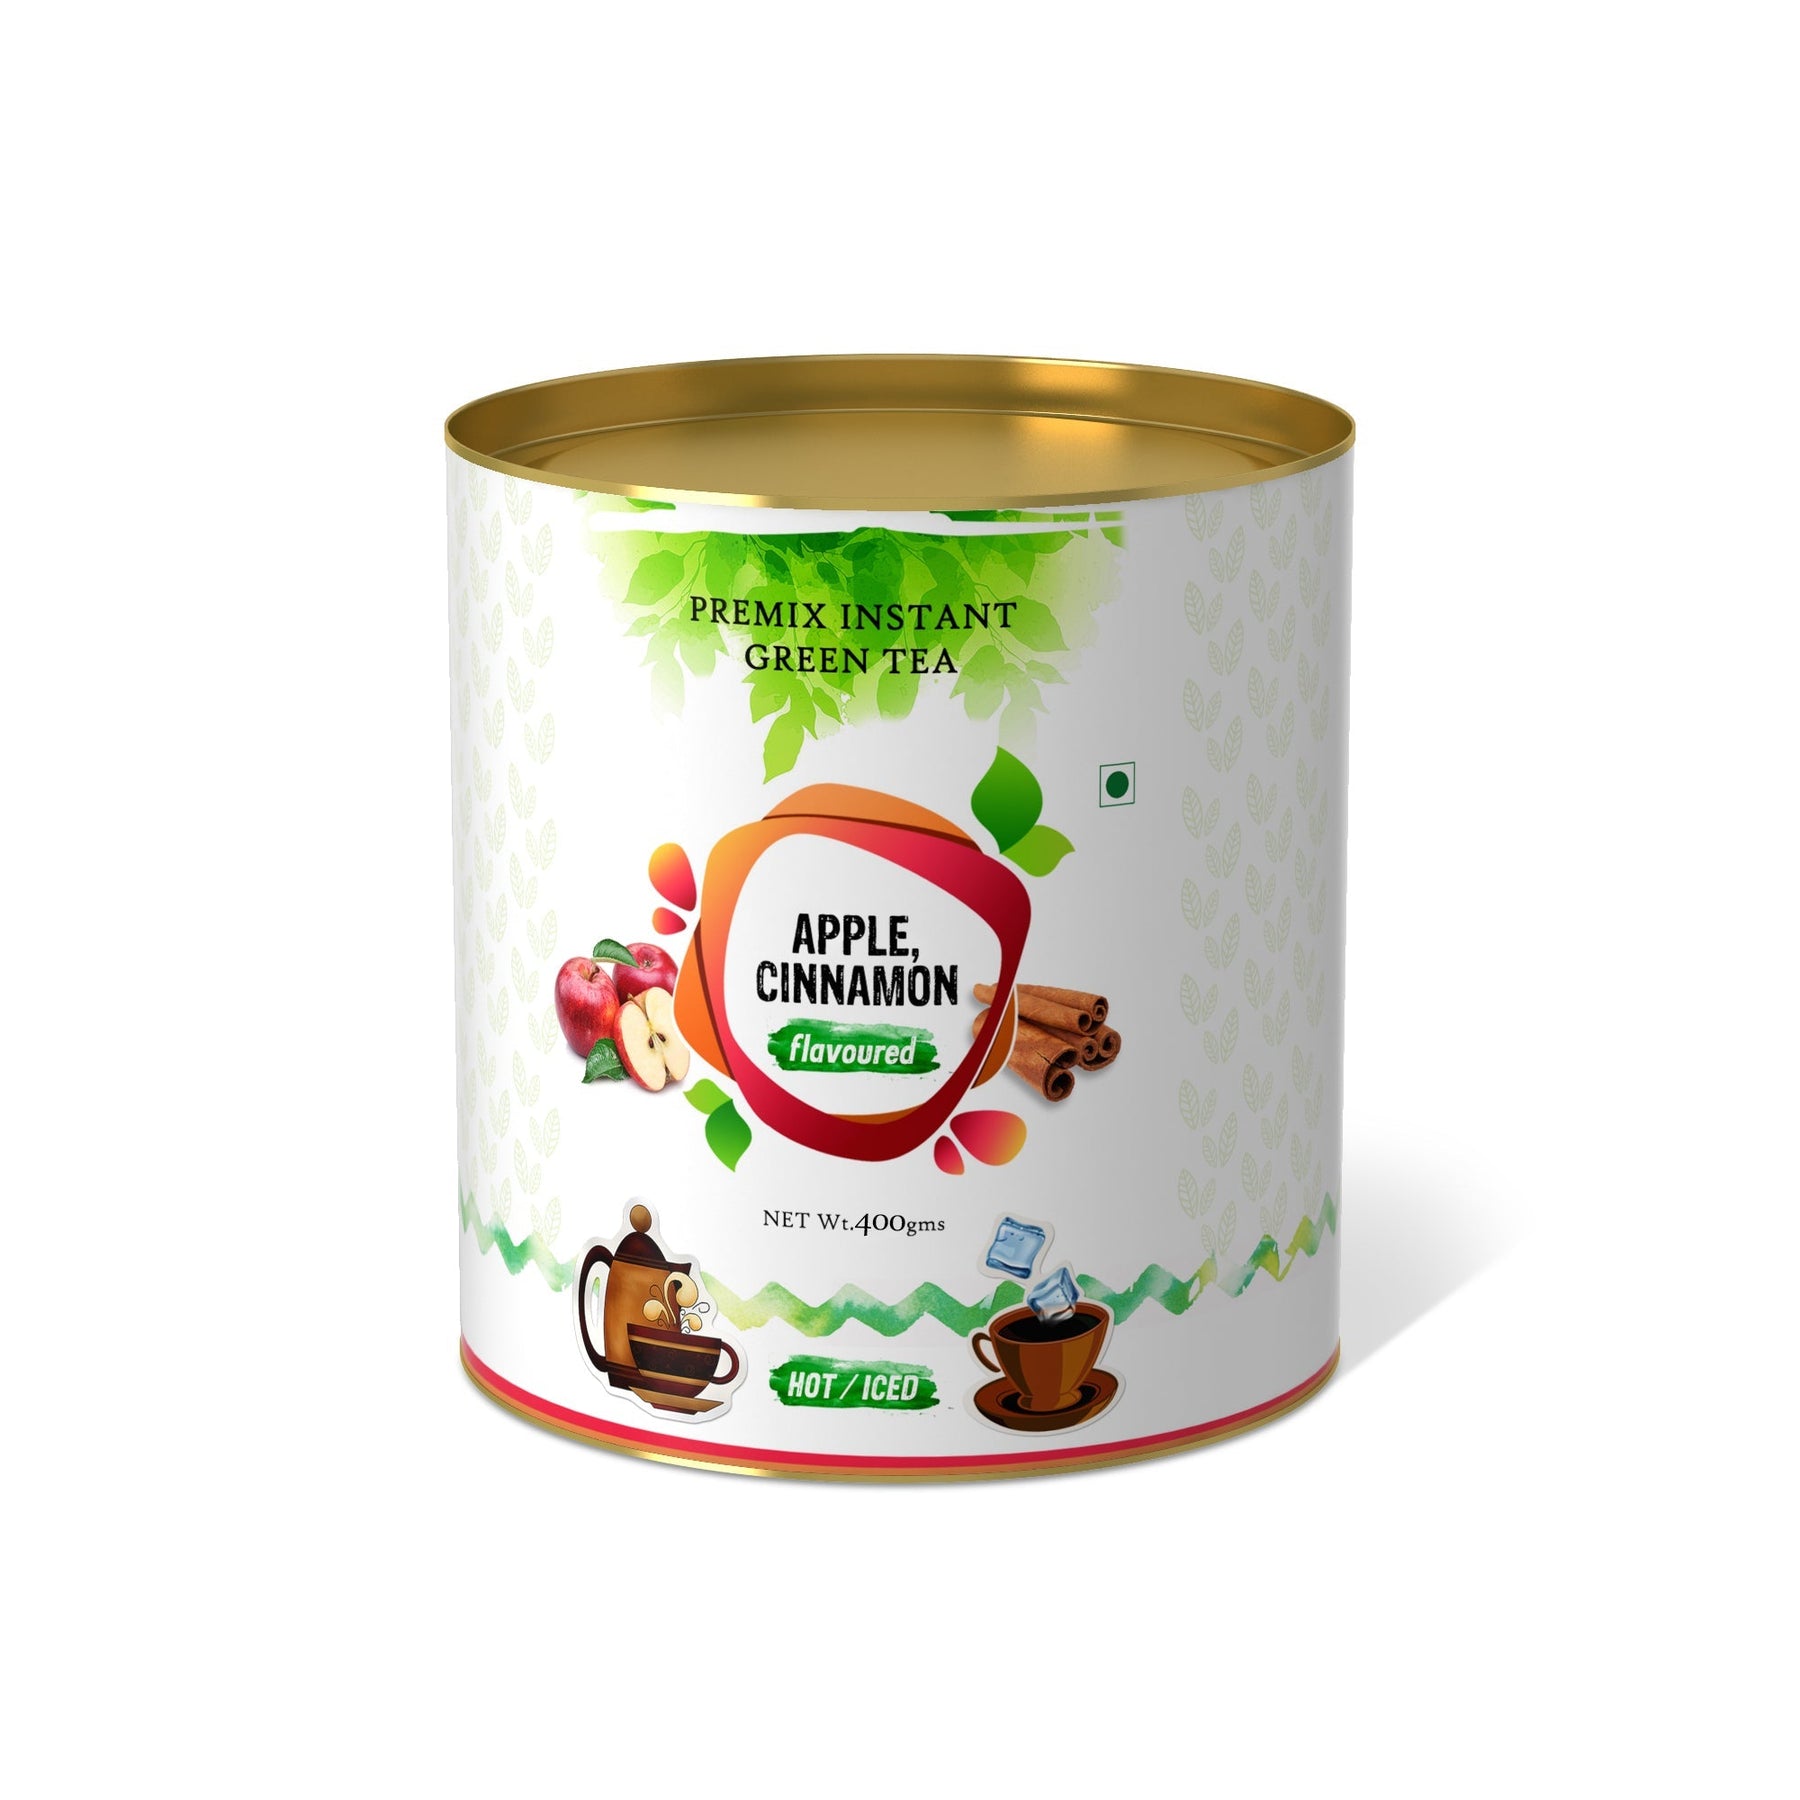 Apple Cinnamon Flavored Instant Green Tea - 400 gms